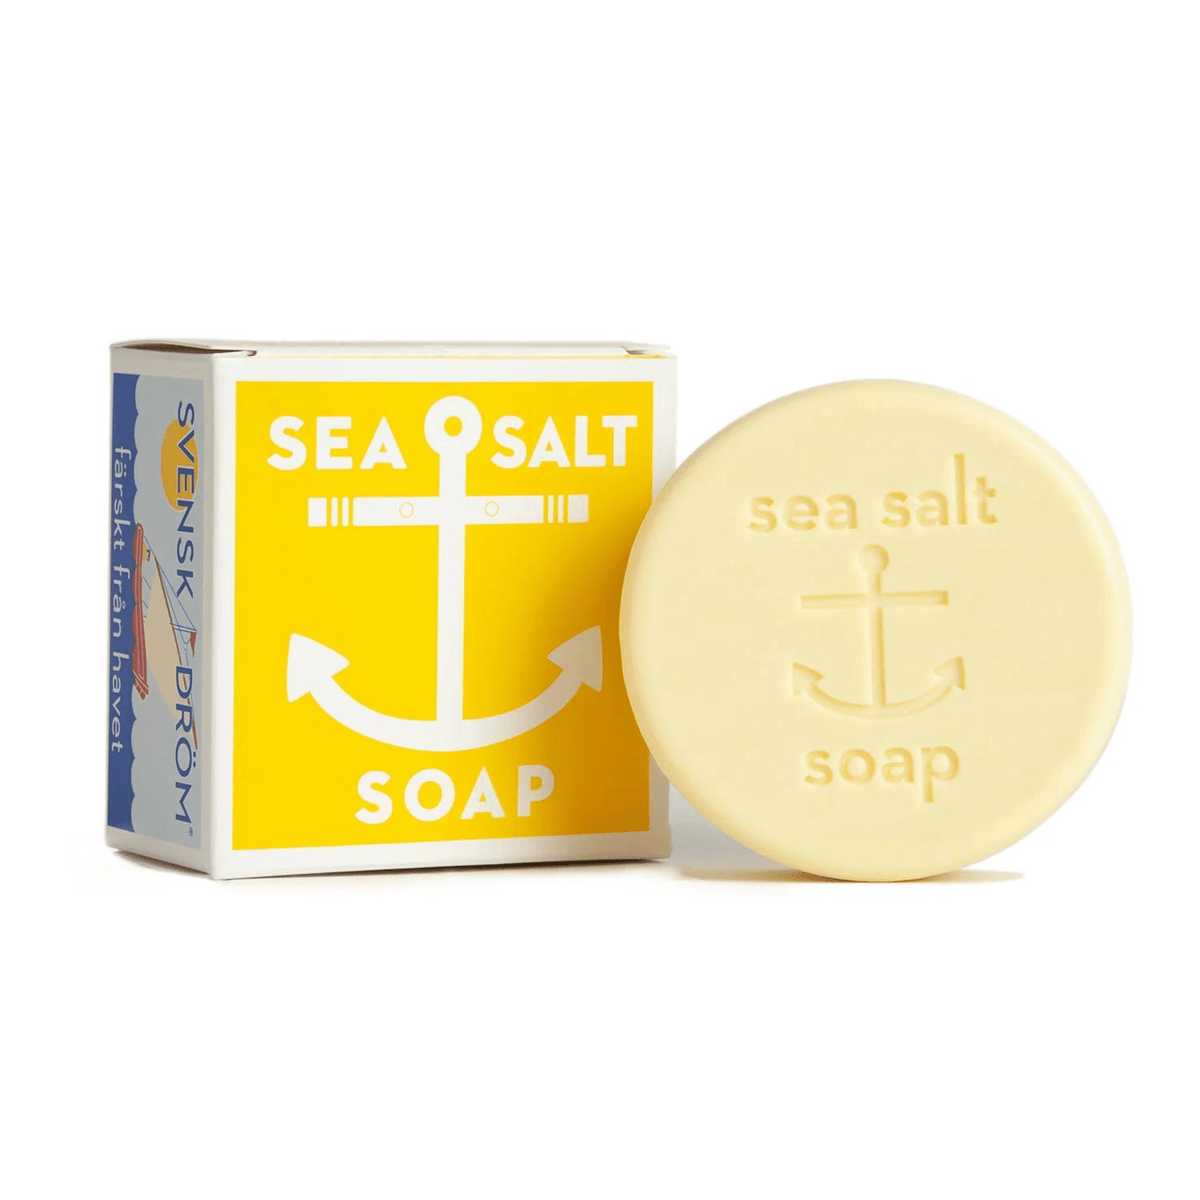 Primary Image of Summer Lemon Sea Salt Soap